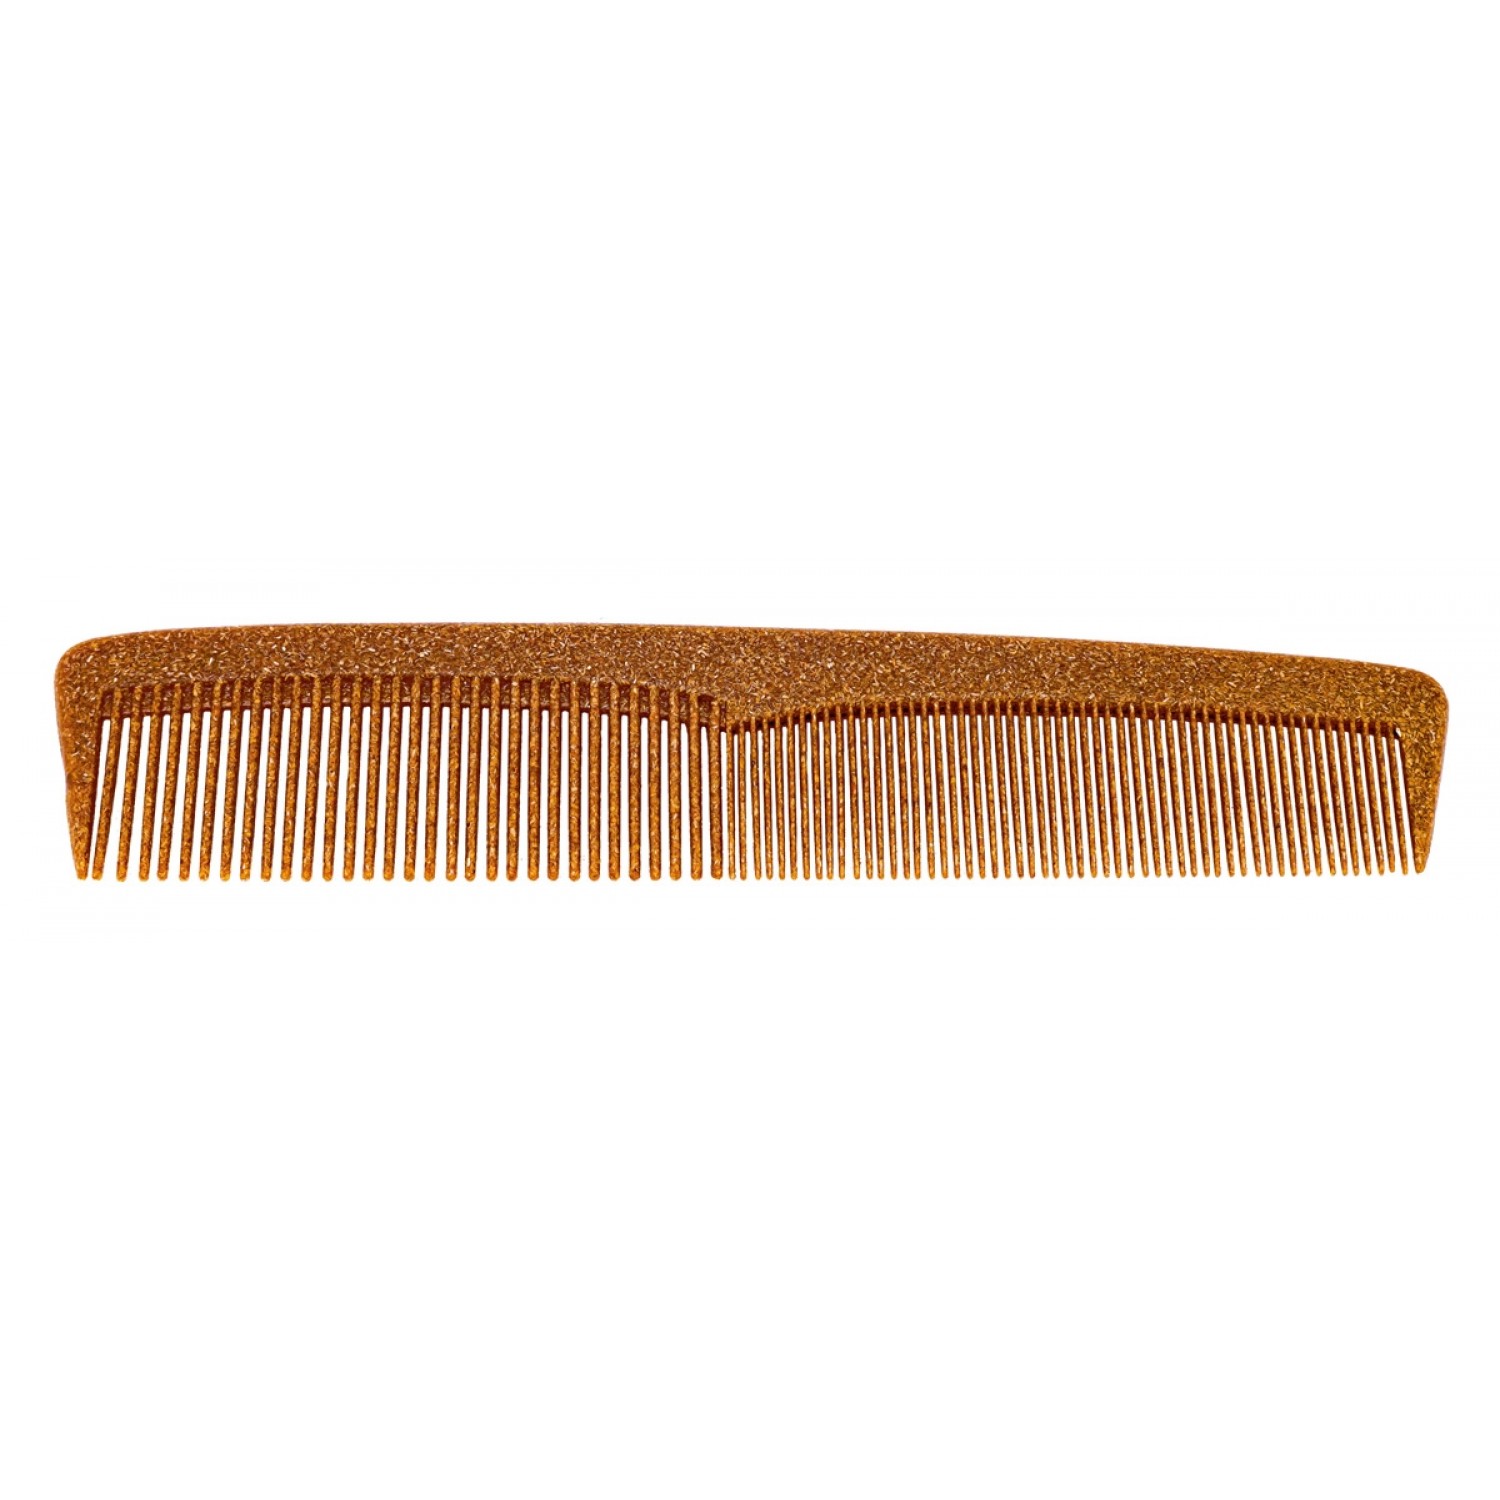 Comb from Liquid Wood - plastic-free ! | Croll & Denecke